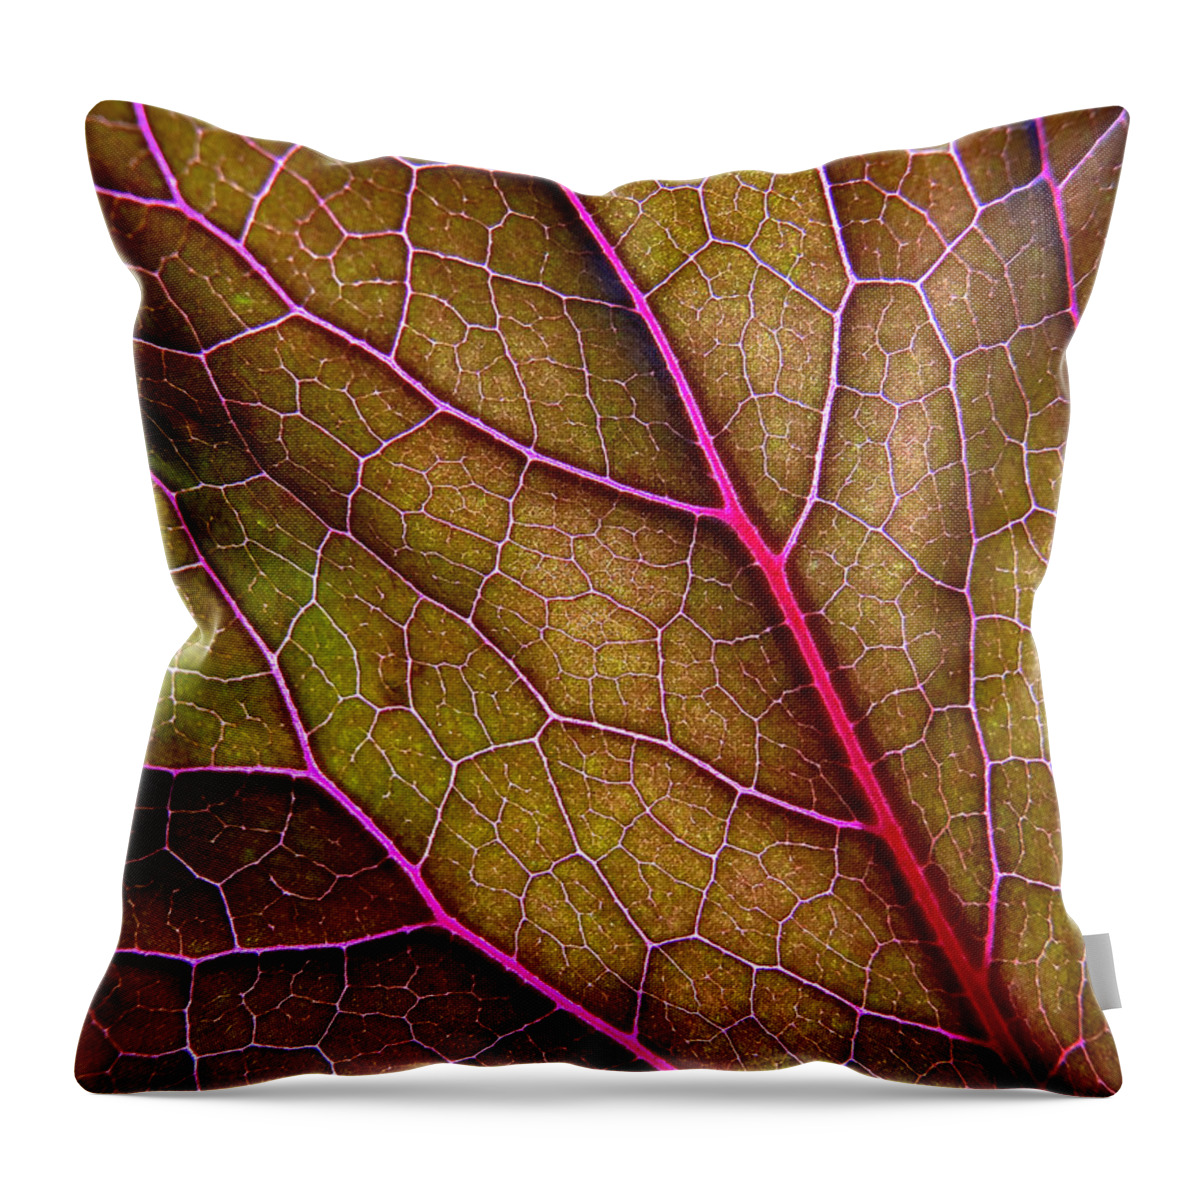 Season Throw Pillow featuring the photograph Details Of An Autumn Leaf by Julien Fourniol/baloulumix